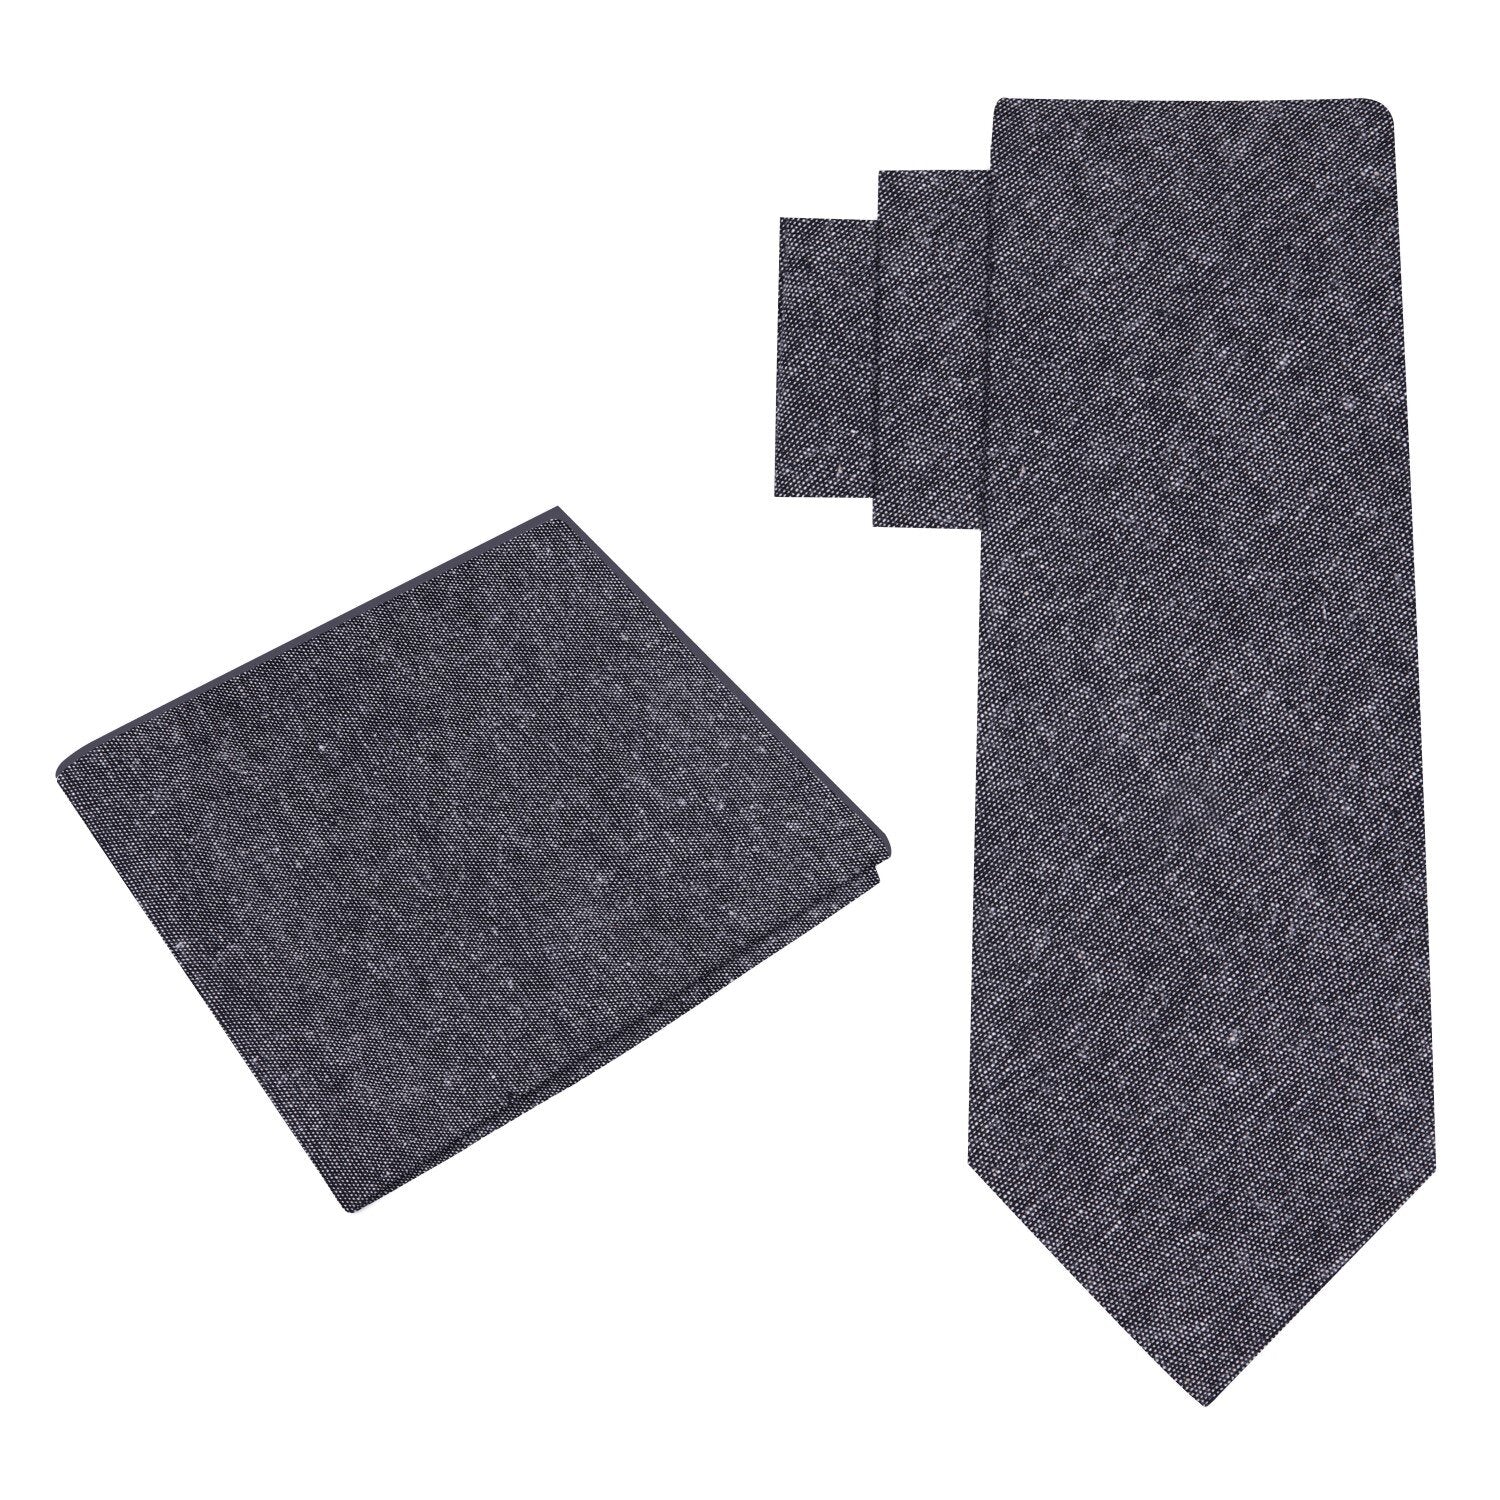 Alt View: Light Black, White Linen Tie and Pocket Square